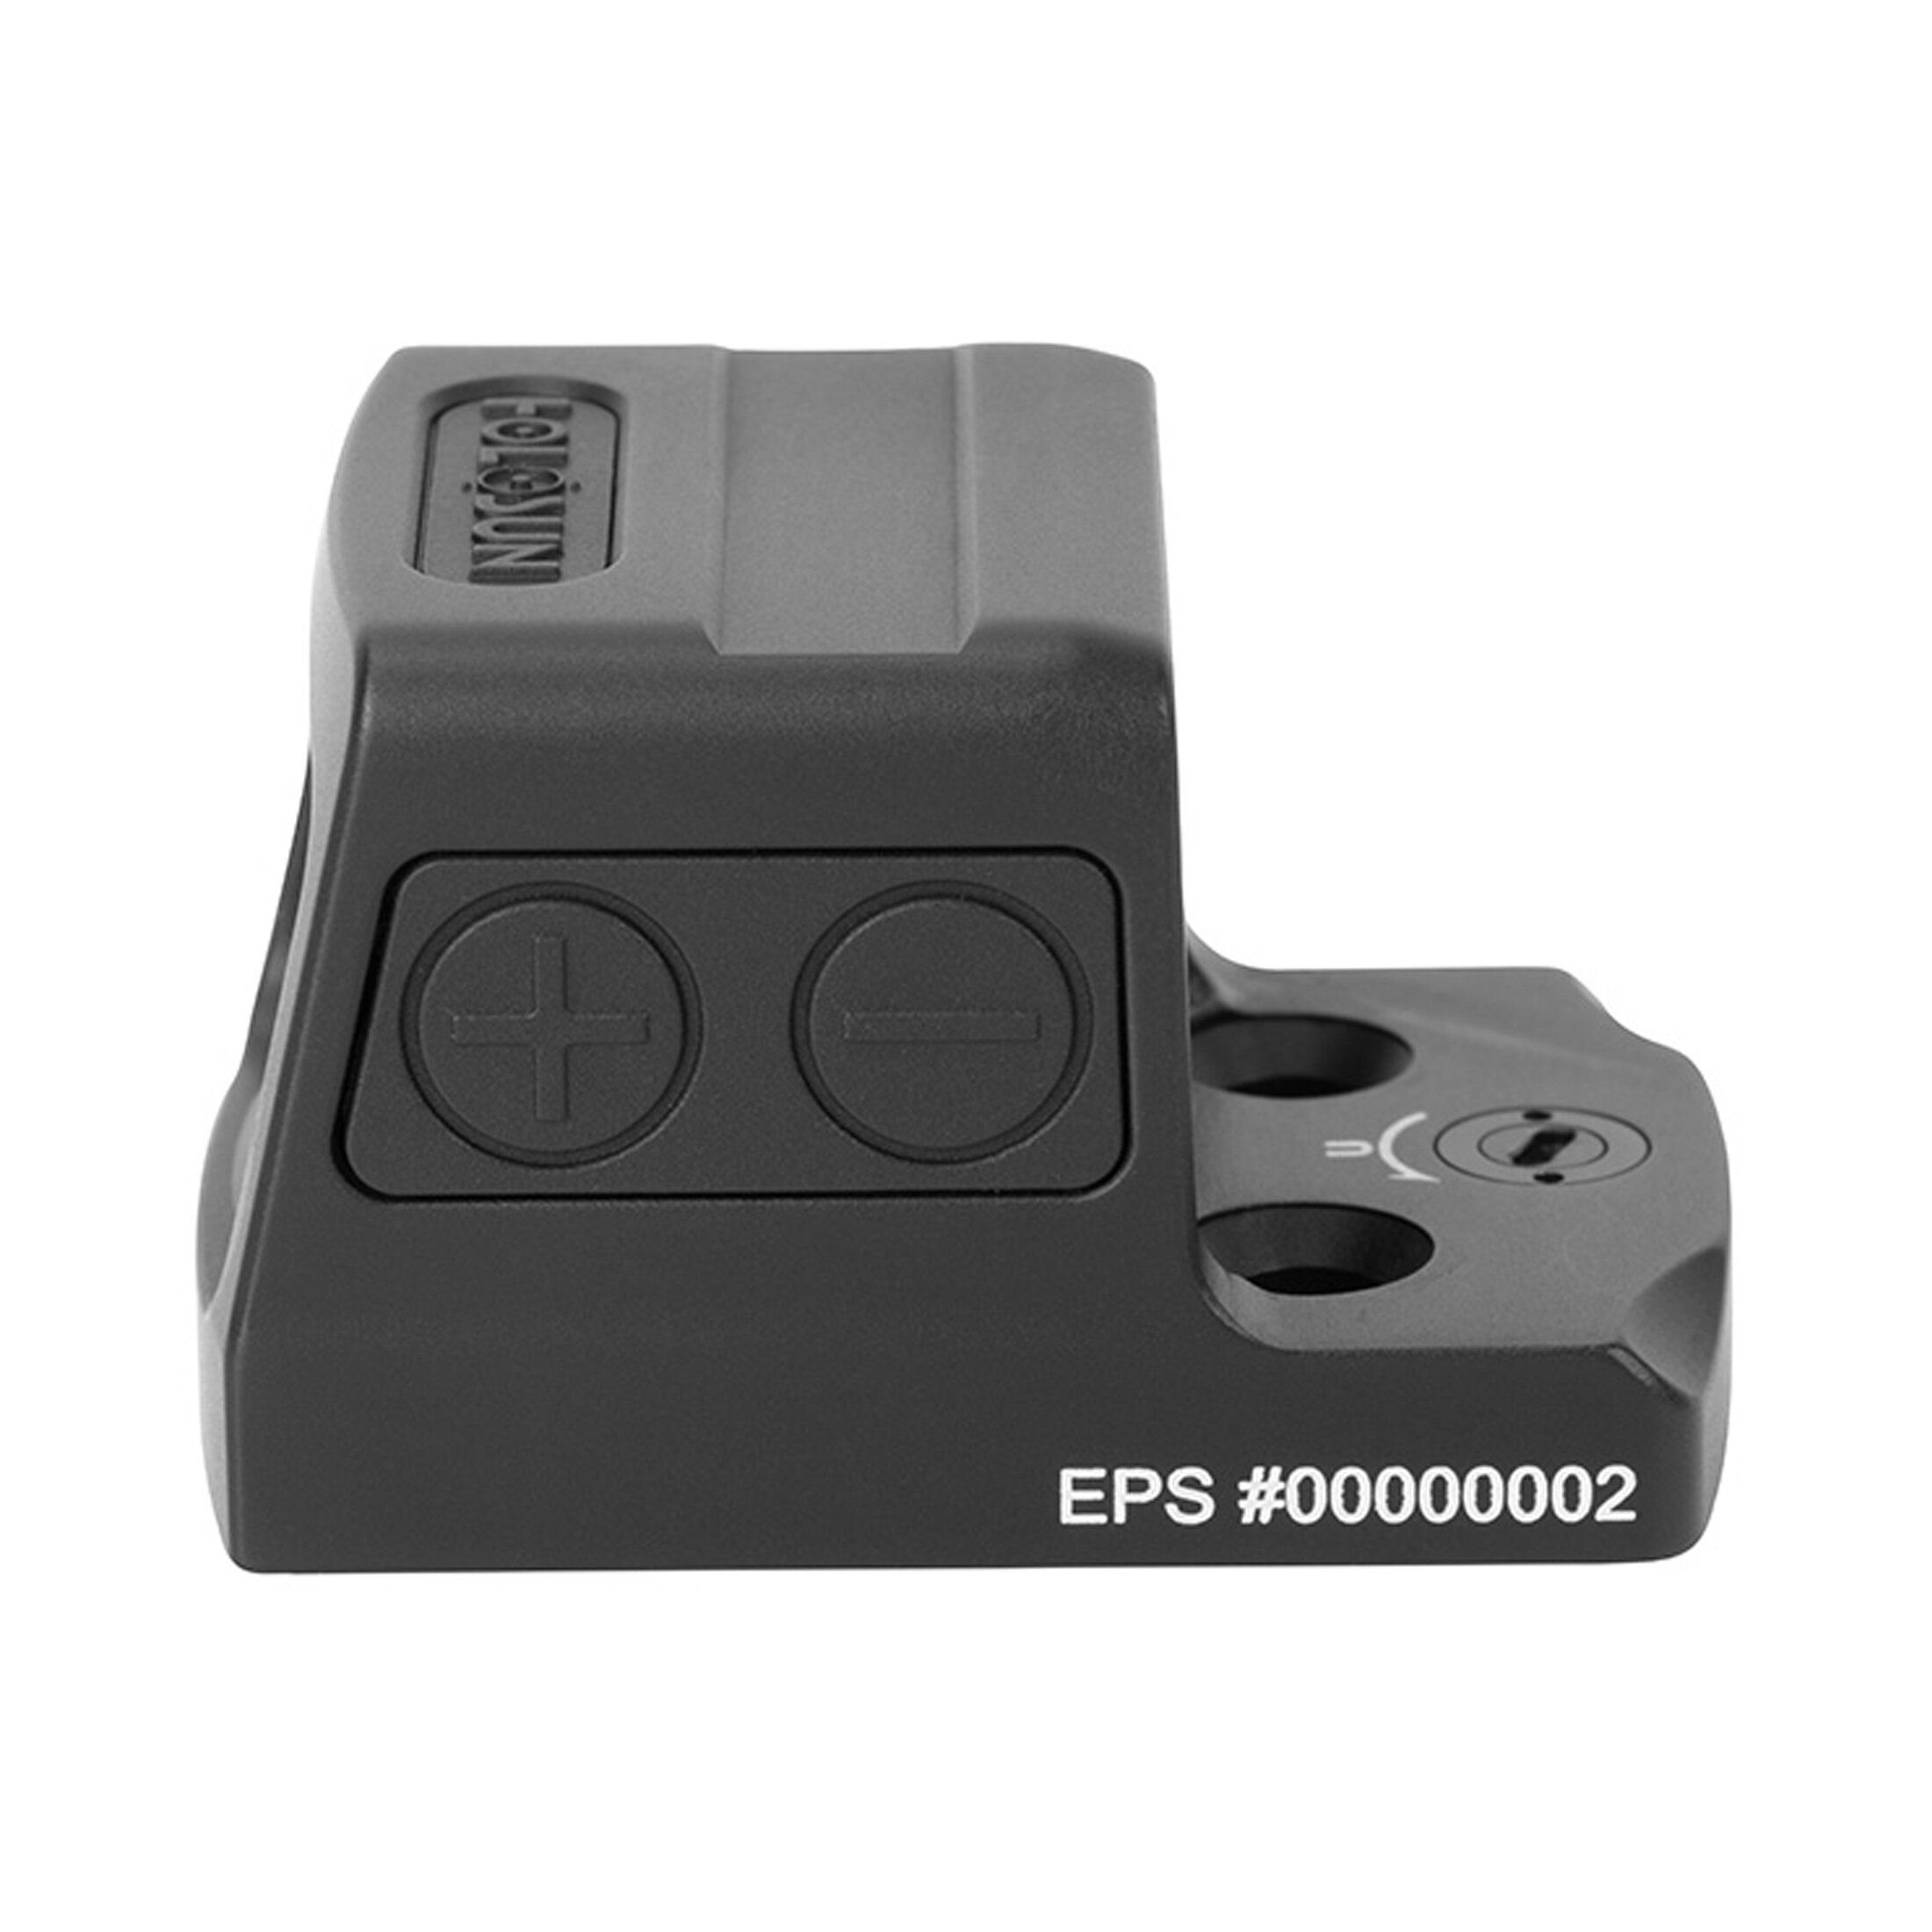 Holosun EPS closed reflex sight 6MOA green dot, aluminum, black, hunting, sport shooting, airsoft, …